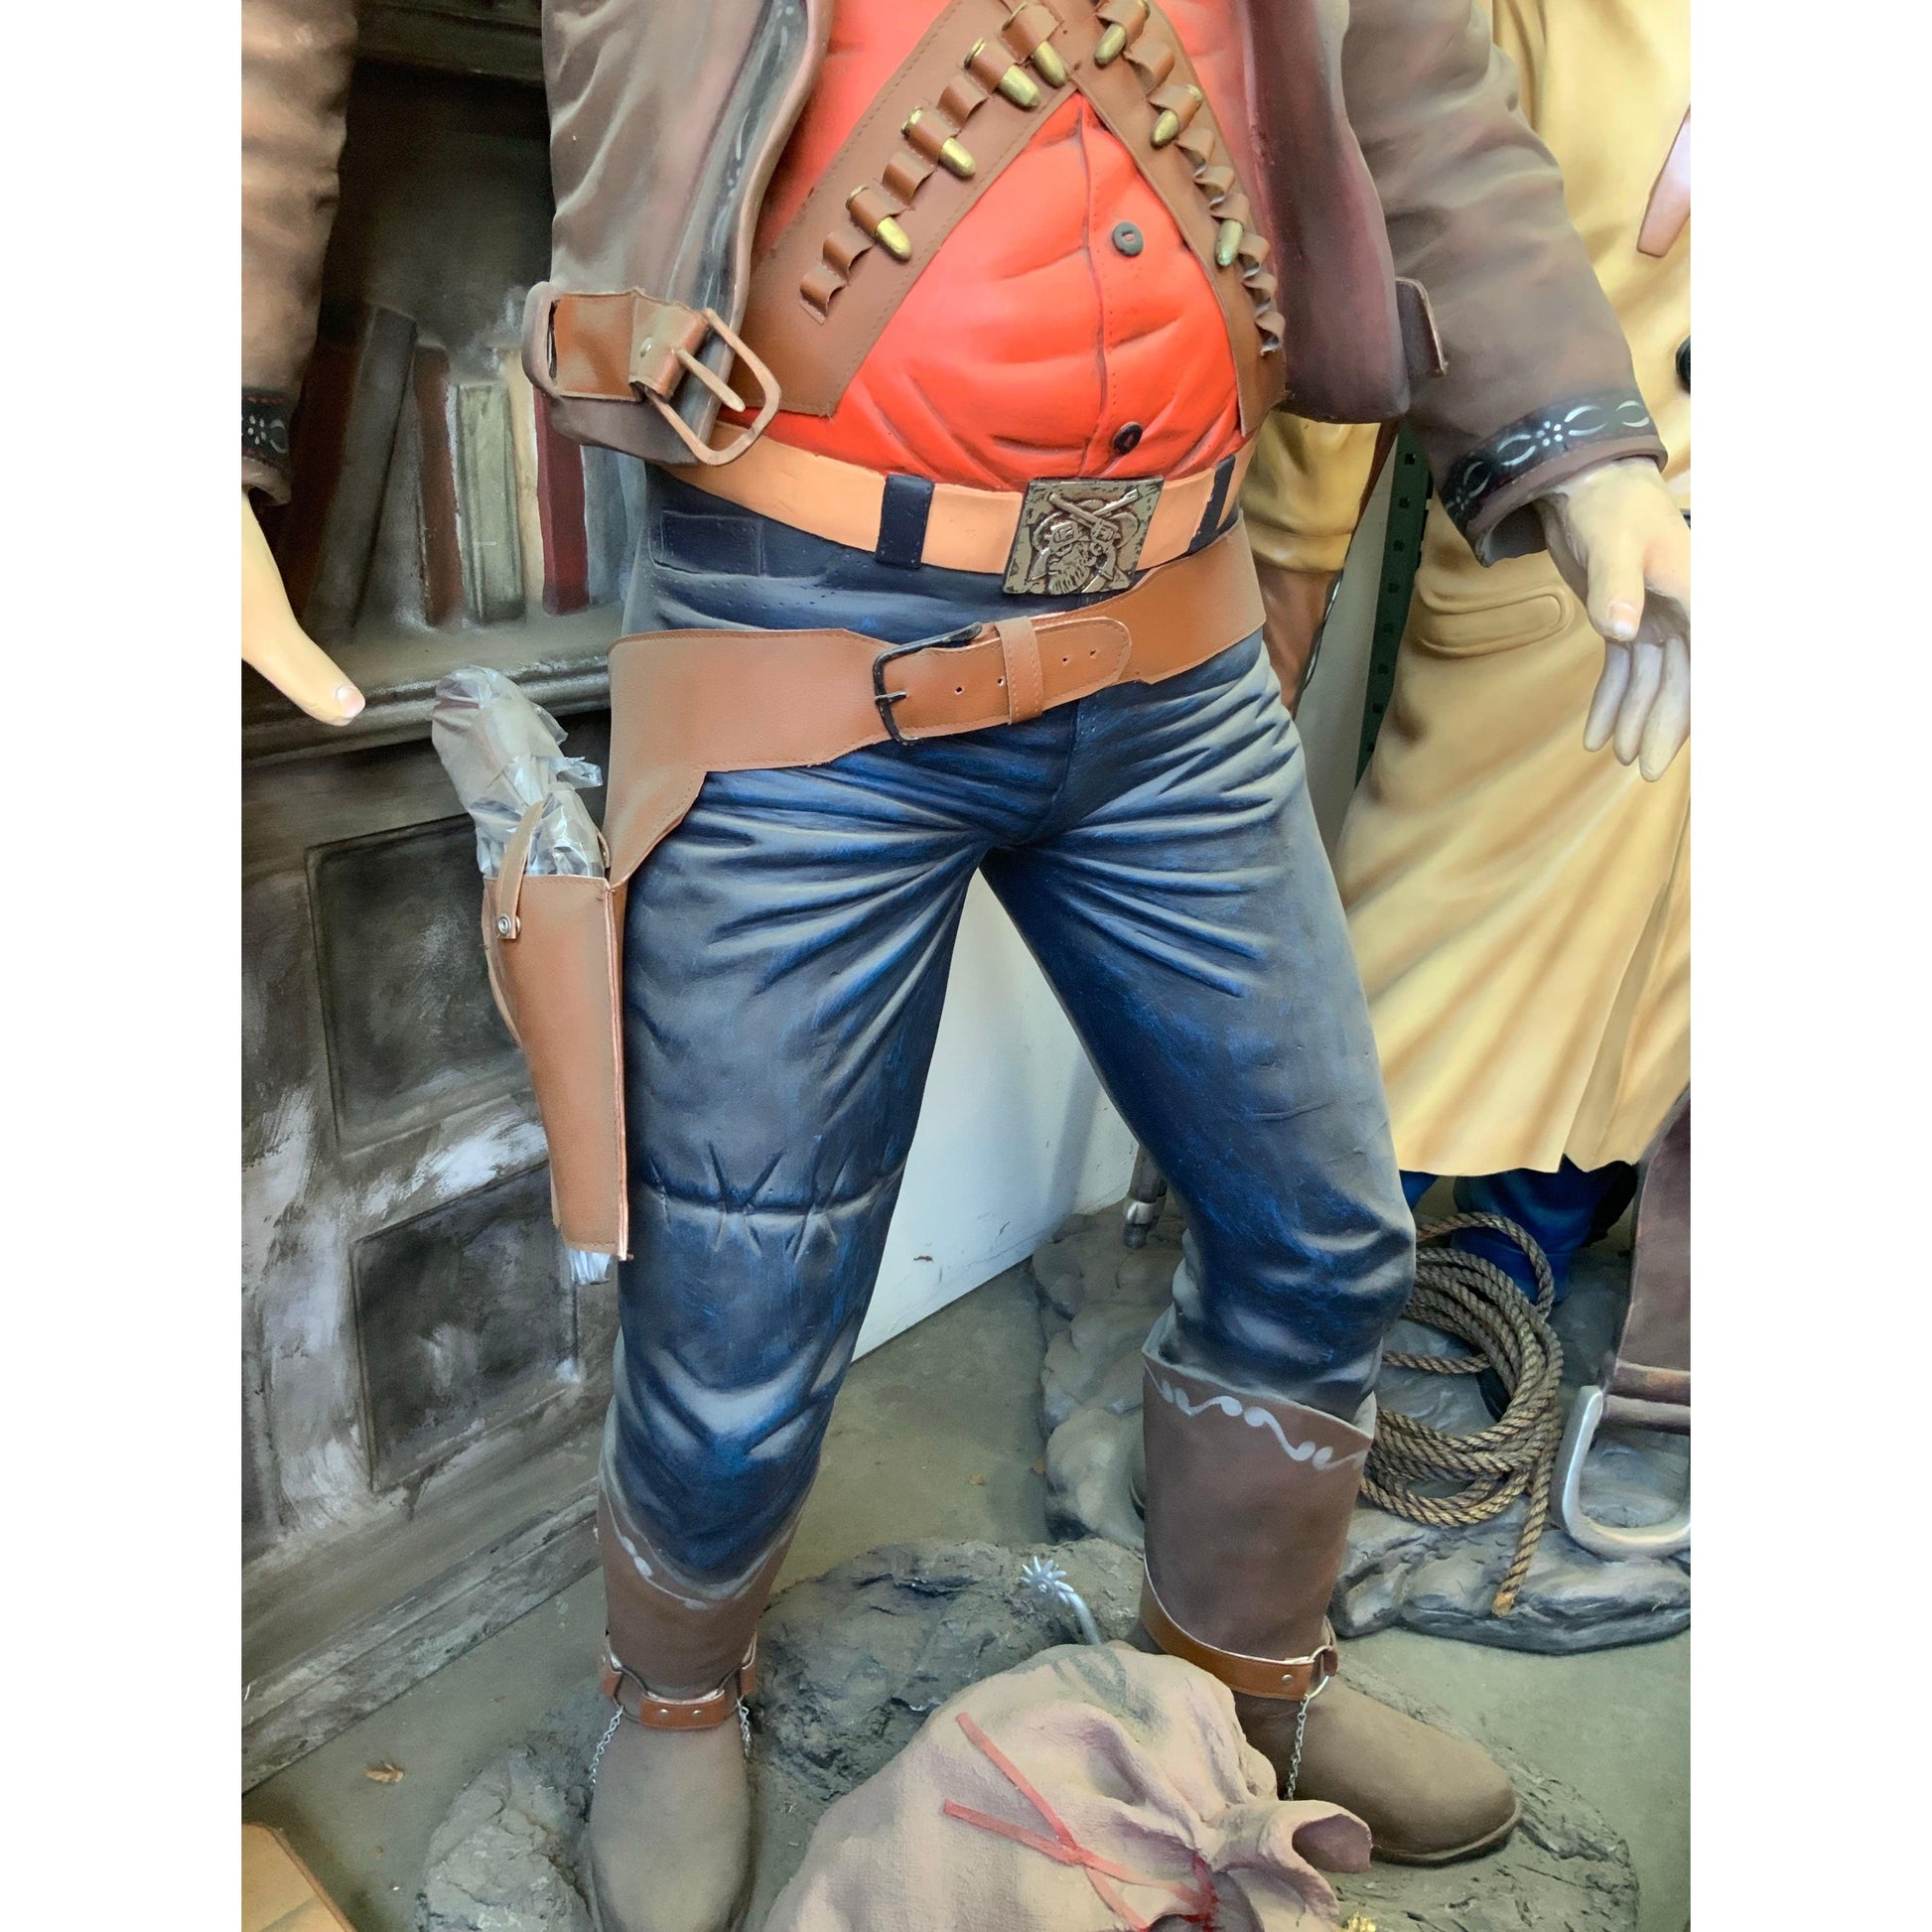 Cowboy With Sombrero Life Size Statue - LM Treasures Prop Rentals 